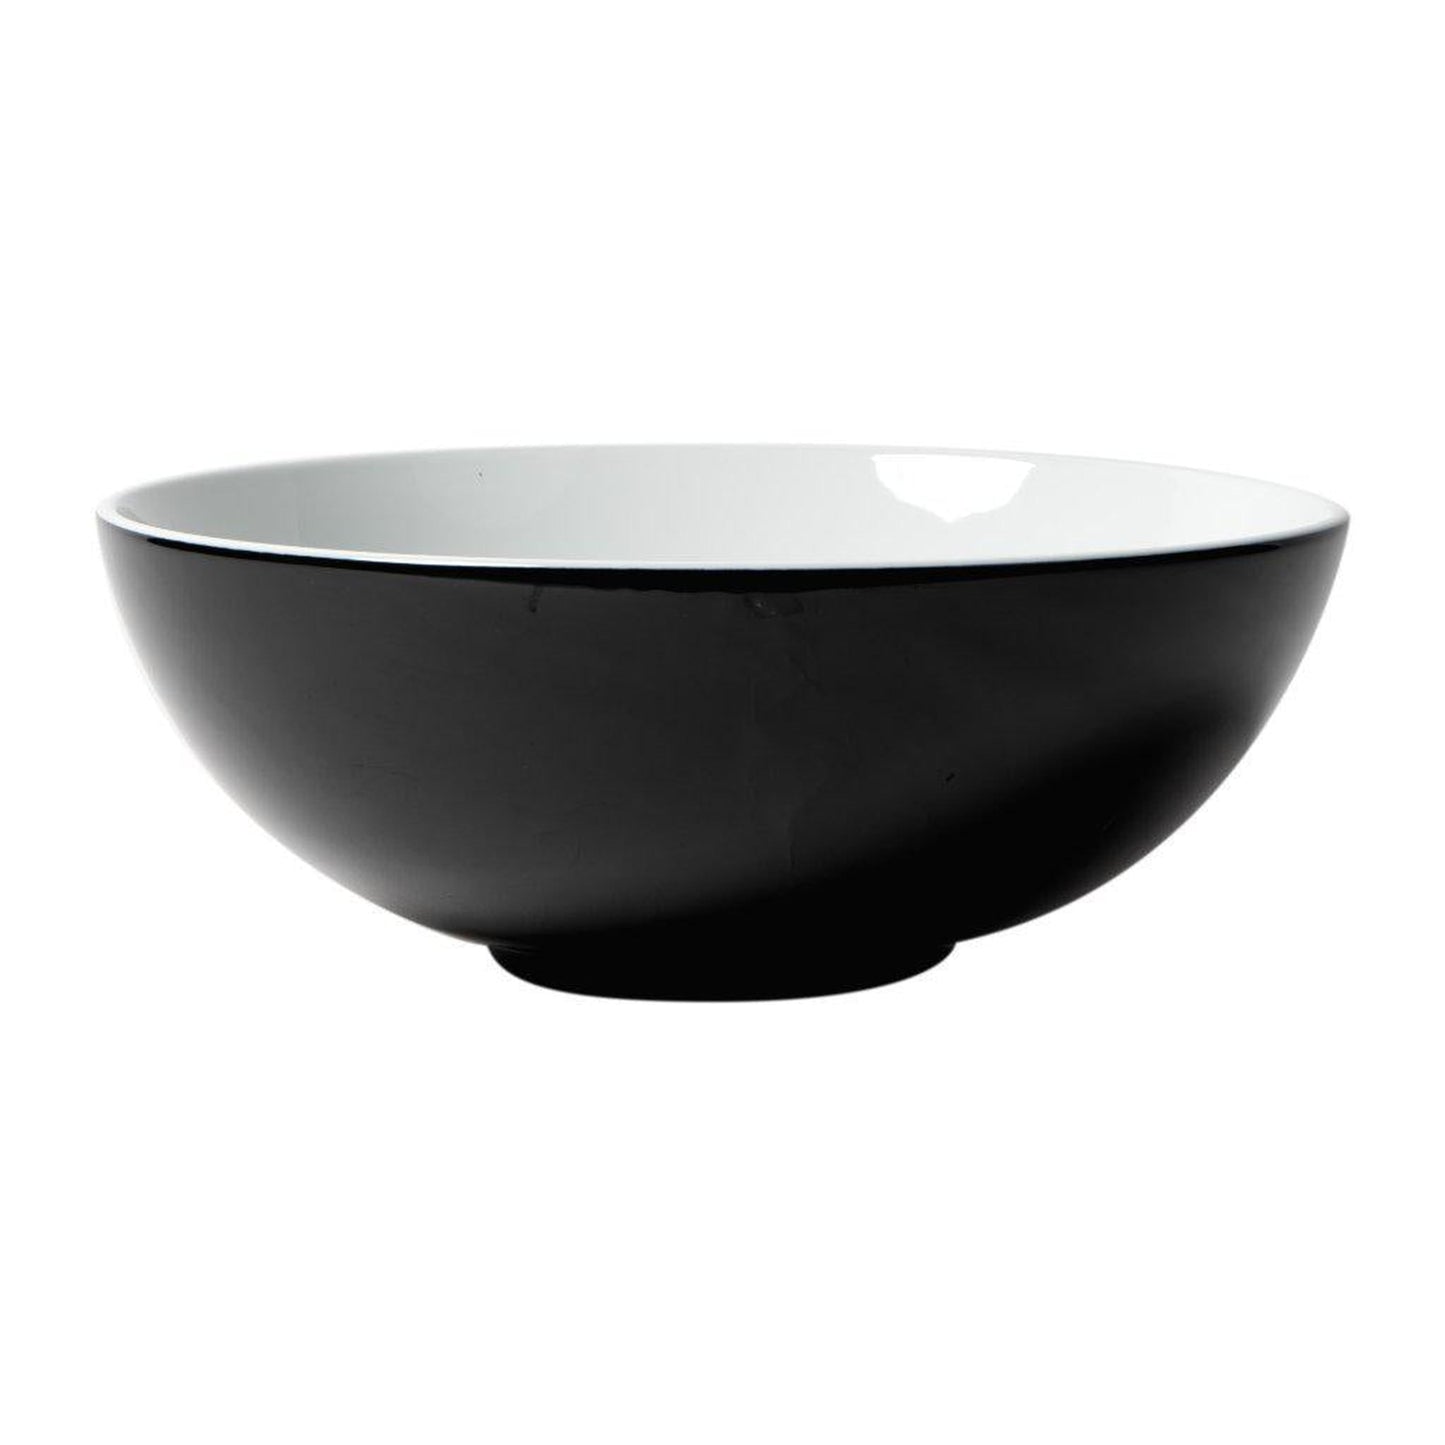 ALFI Brand ABC906 15" Black and White Above Mount Round Ceramic Bathroom Sink